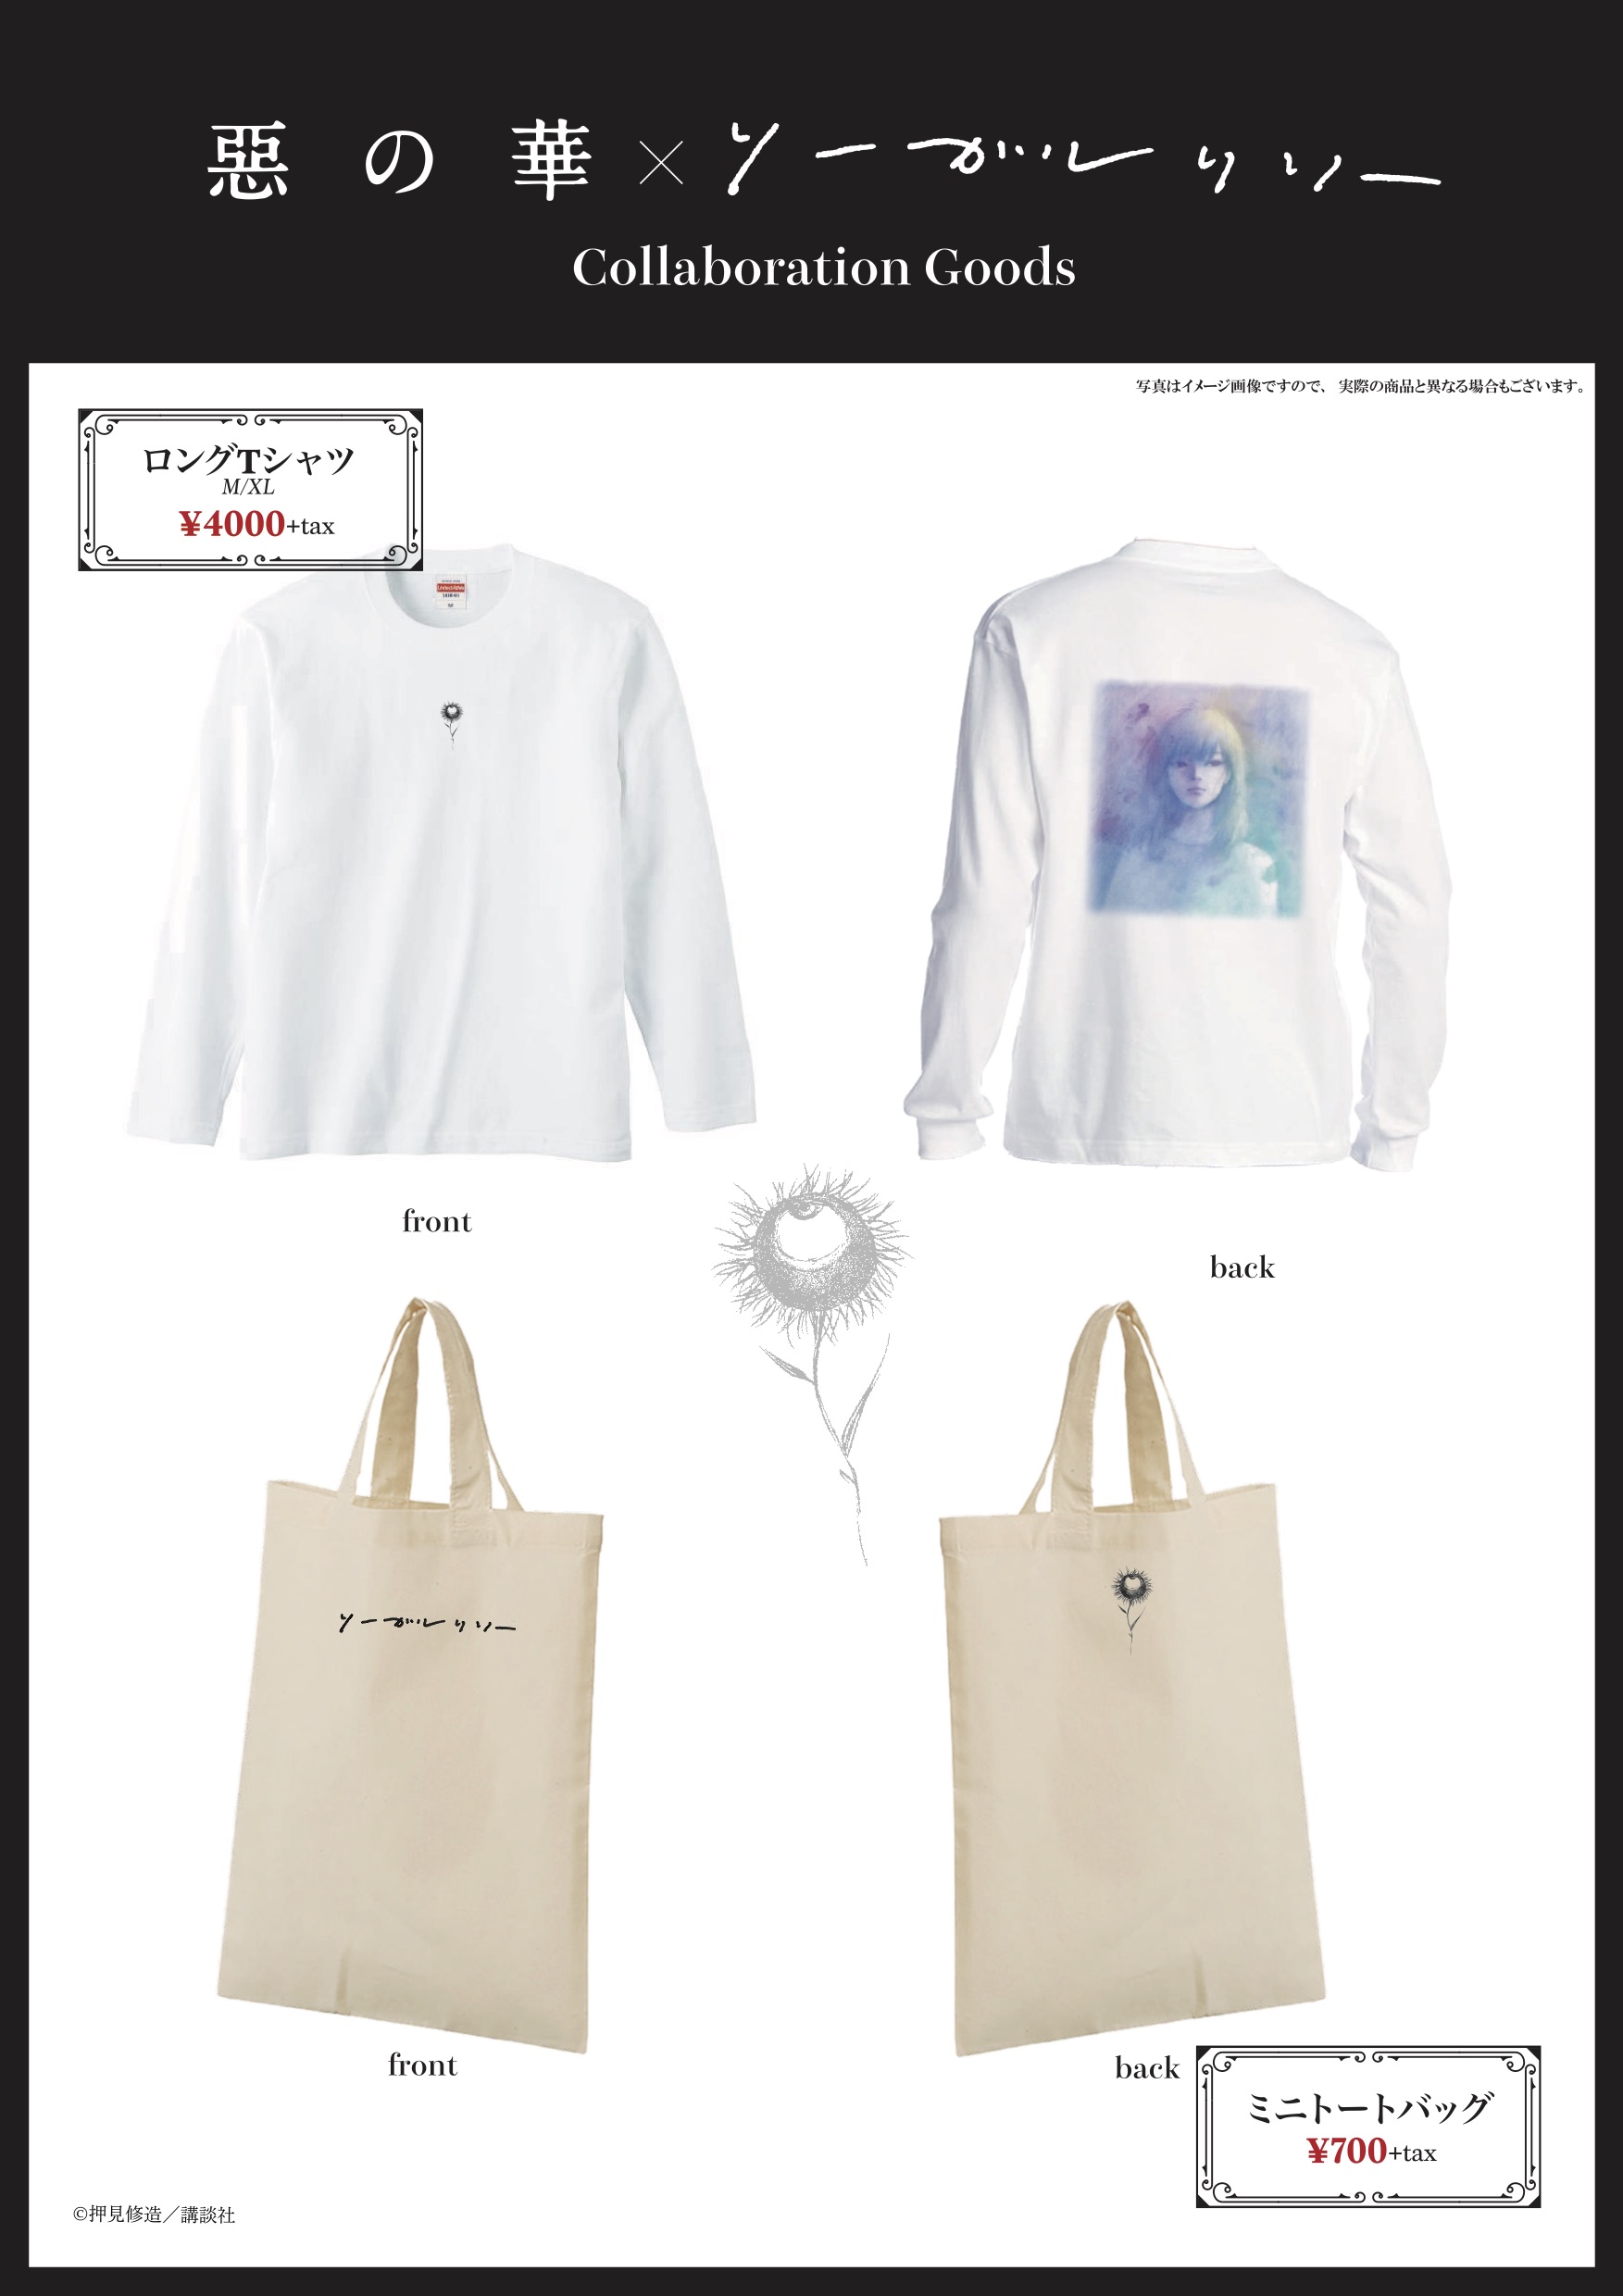 Regal Lily x "Evil Flower" Villevan limited collaboration goods